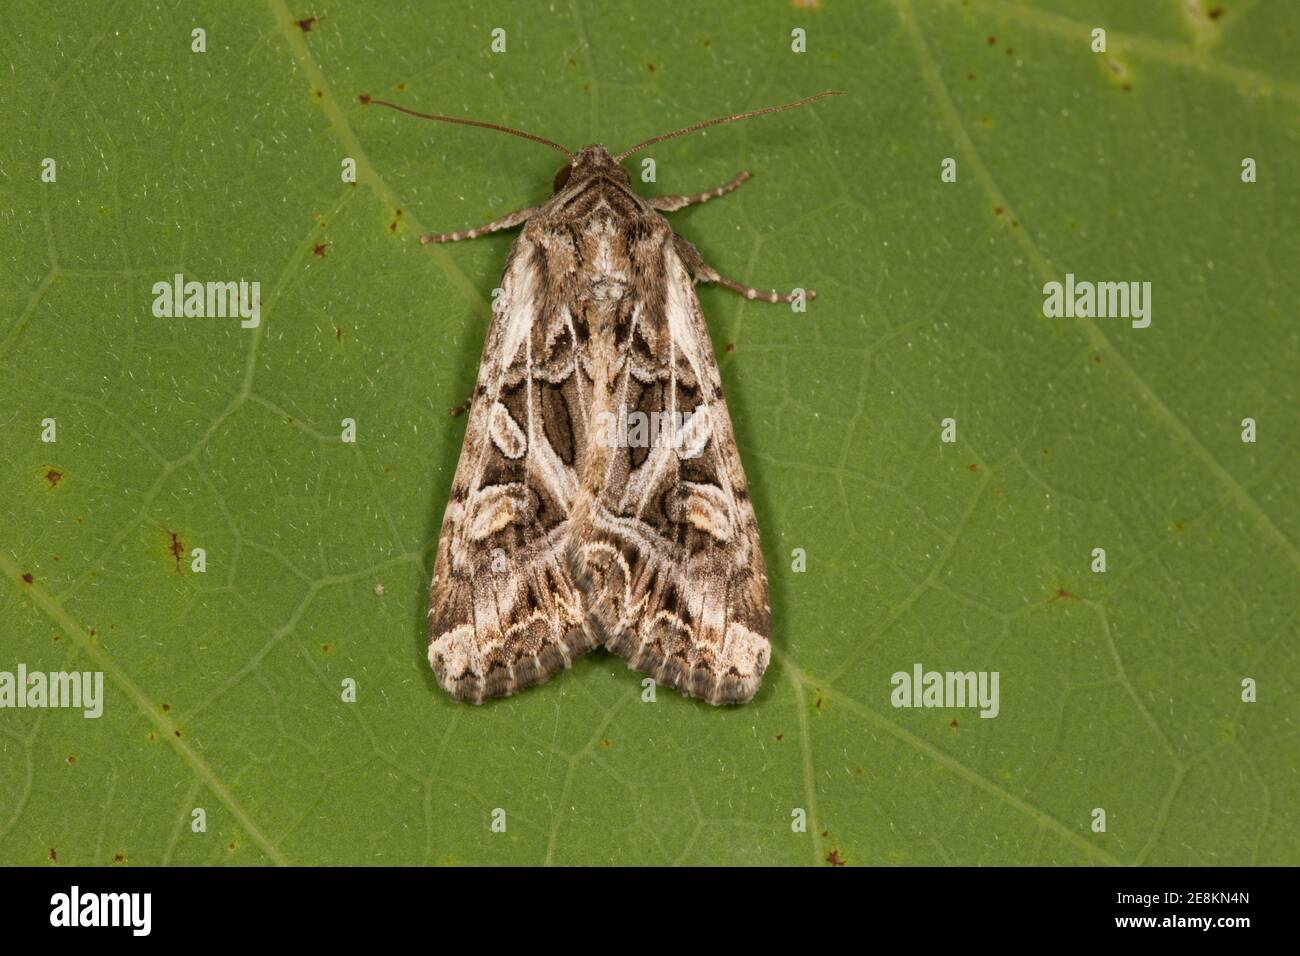 Noctuid Moth, Trichordestra prodeniformis, Noctuidae. Forewing Length 14 mm. Emerged 8-12-15. Reared from larva feeding on grass seed head. Larva imag Stock Photo